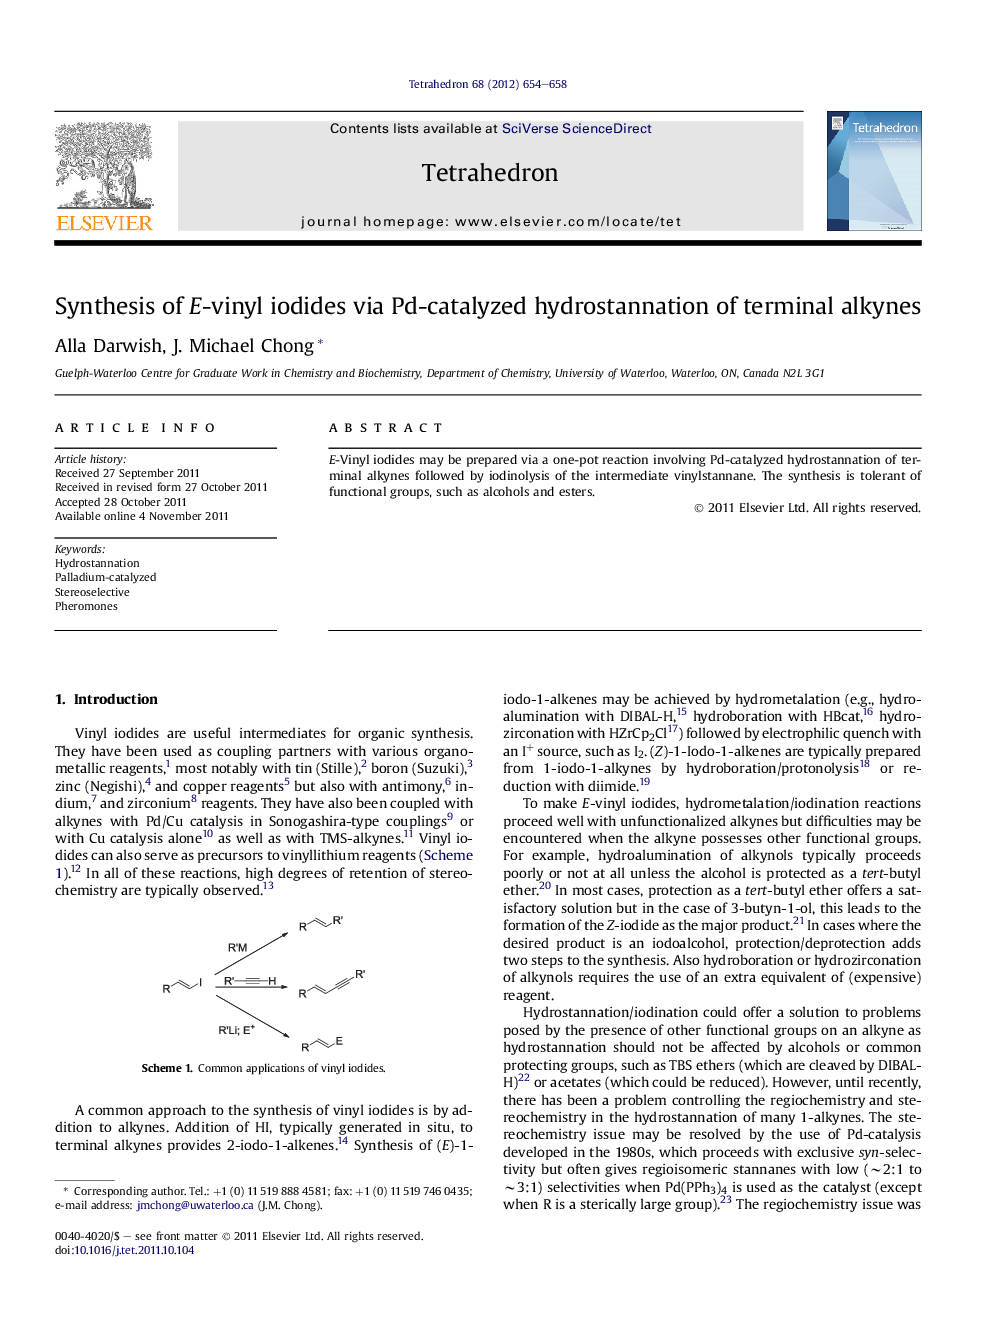 Synthesis of E-vinyl iodides via Pd-catalyzed hydrostannation of terminal alkynes